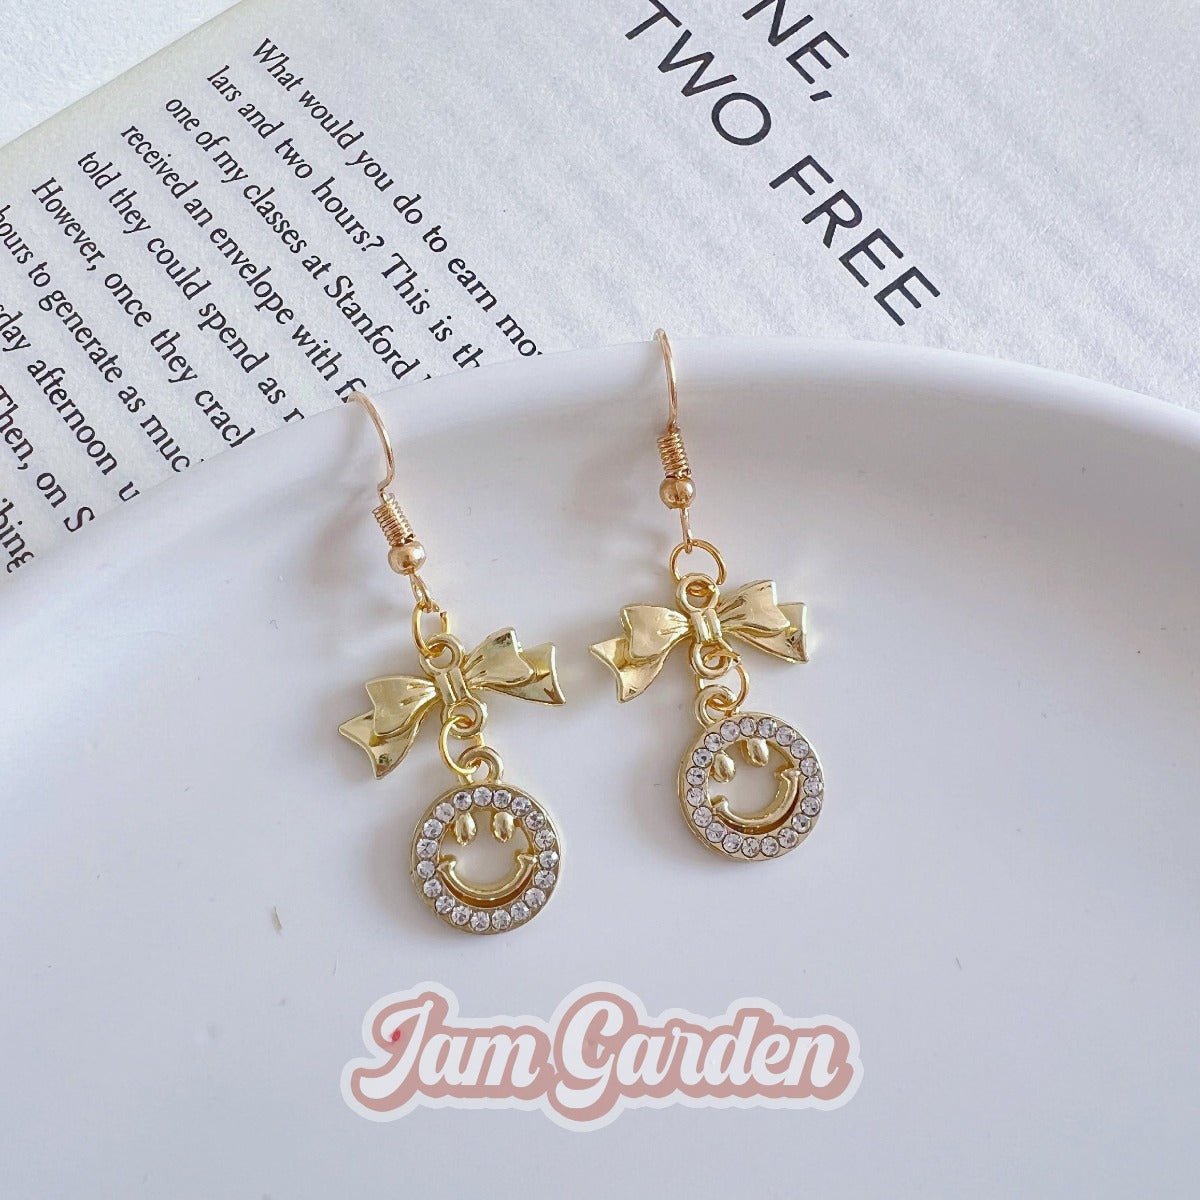 [Happy Every Day] Smiley face niche original handmade earrings - Jam Garden